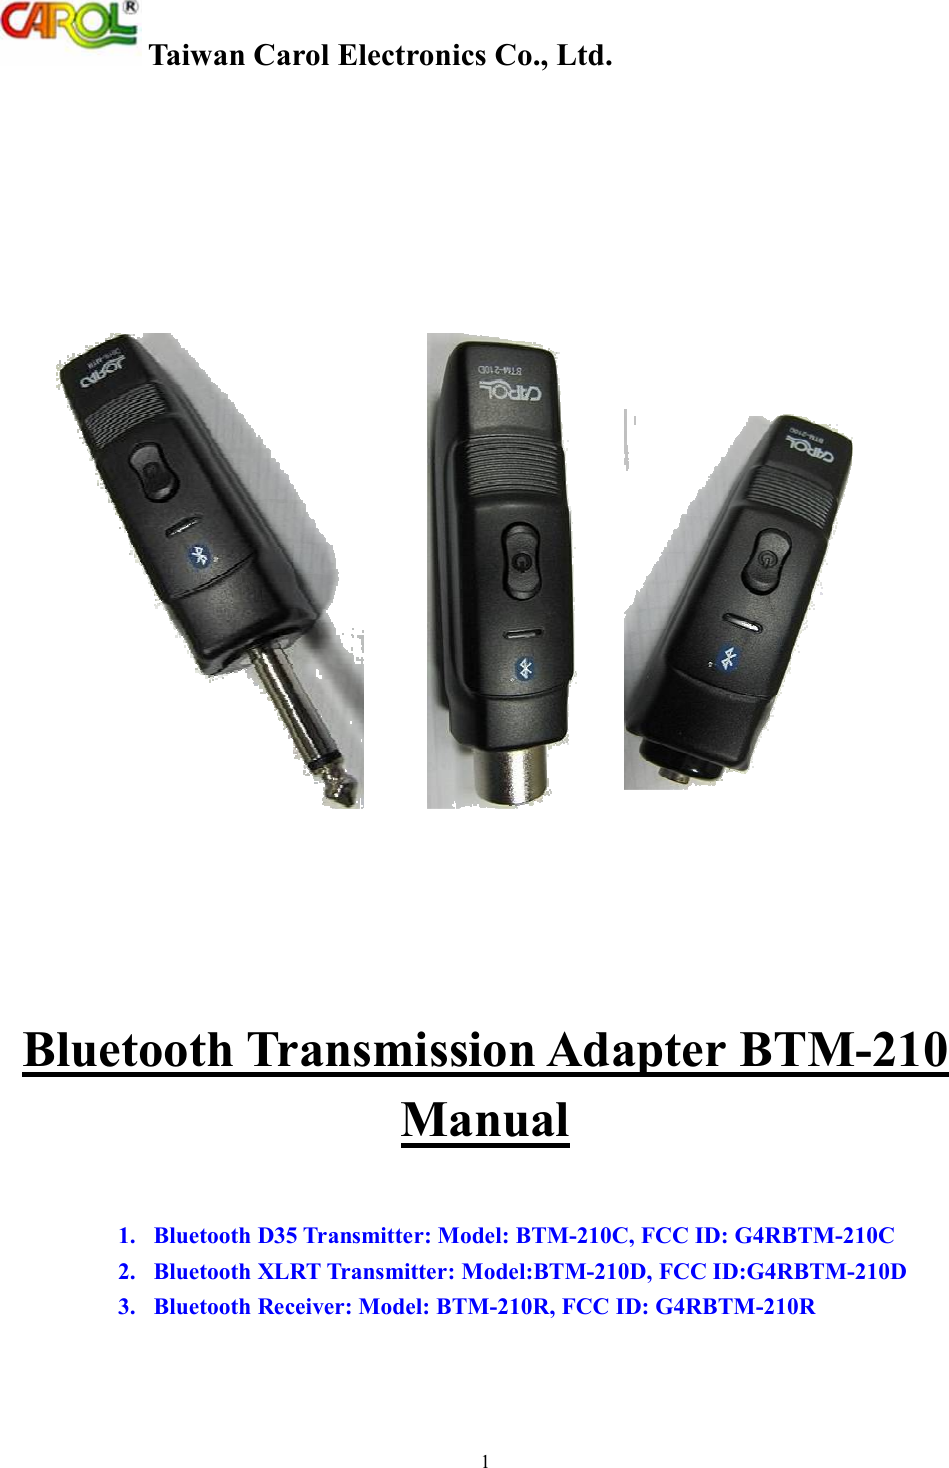  Taiwan Carol Electronics Co., Ltd. 1   Bluetooth Transmission Adapter BTM-210 Manual   1.   Bluetooth D35 Transmitter: Model: BTM-210C, FCC ID: G4RBTM-210C 2.   Bluetooth XLRT Transmitter: Model:BTM-210D, FCC ID:G4RBTM-210D 3.   Bluetooth Receiver: Model: BTM-210R, FCC ID: G4RBTM-210R  